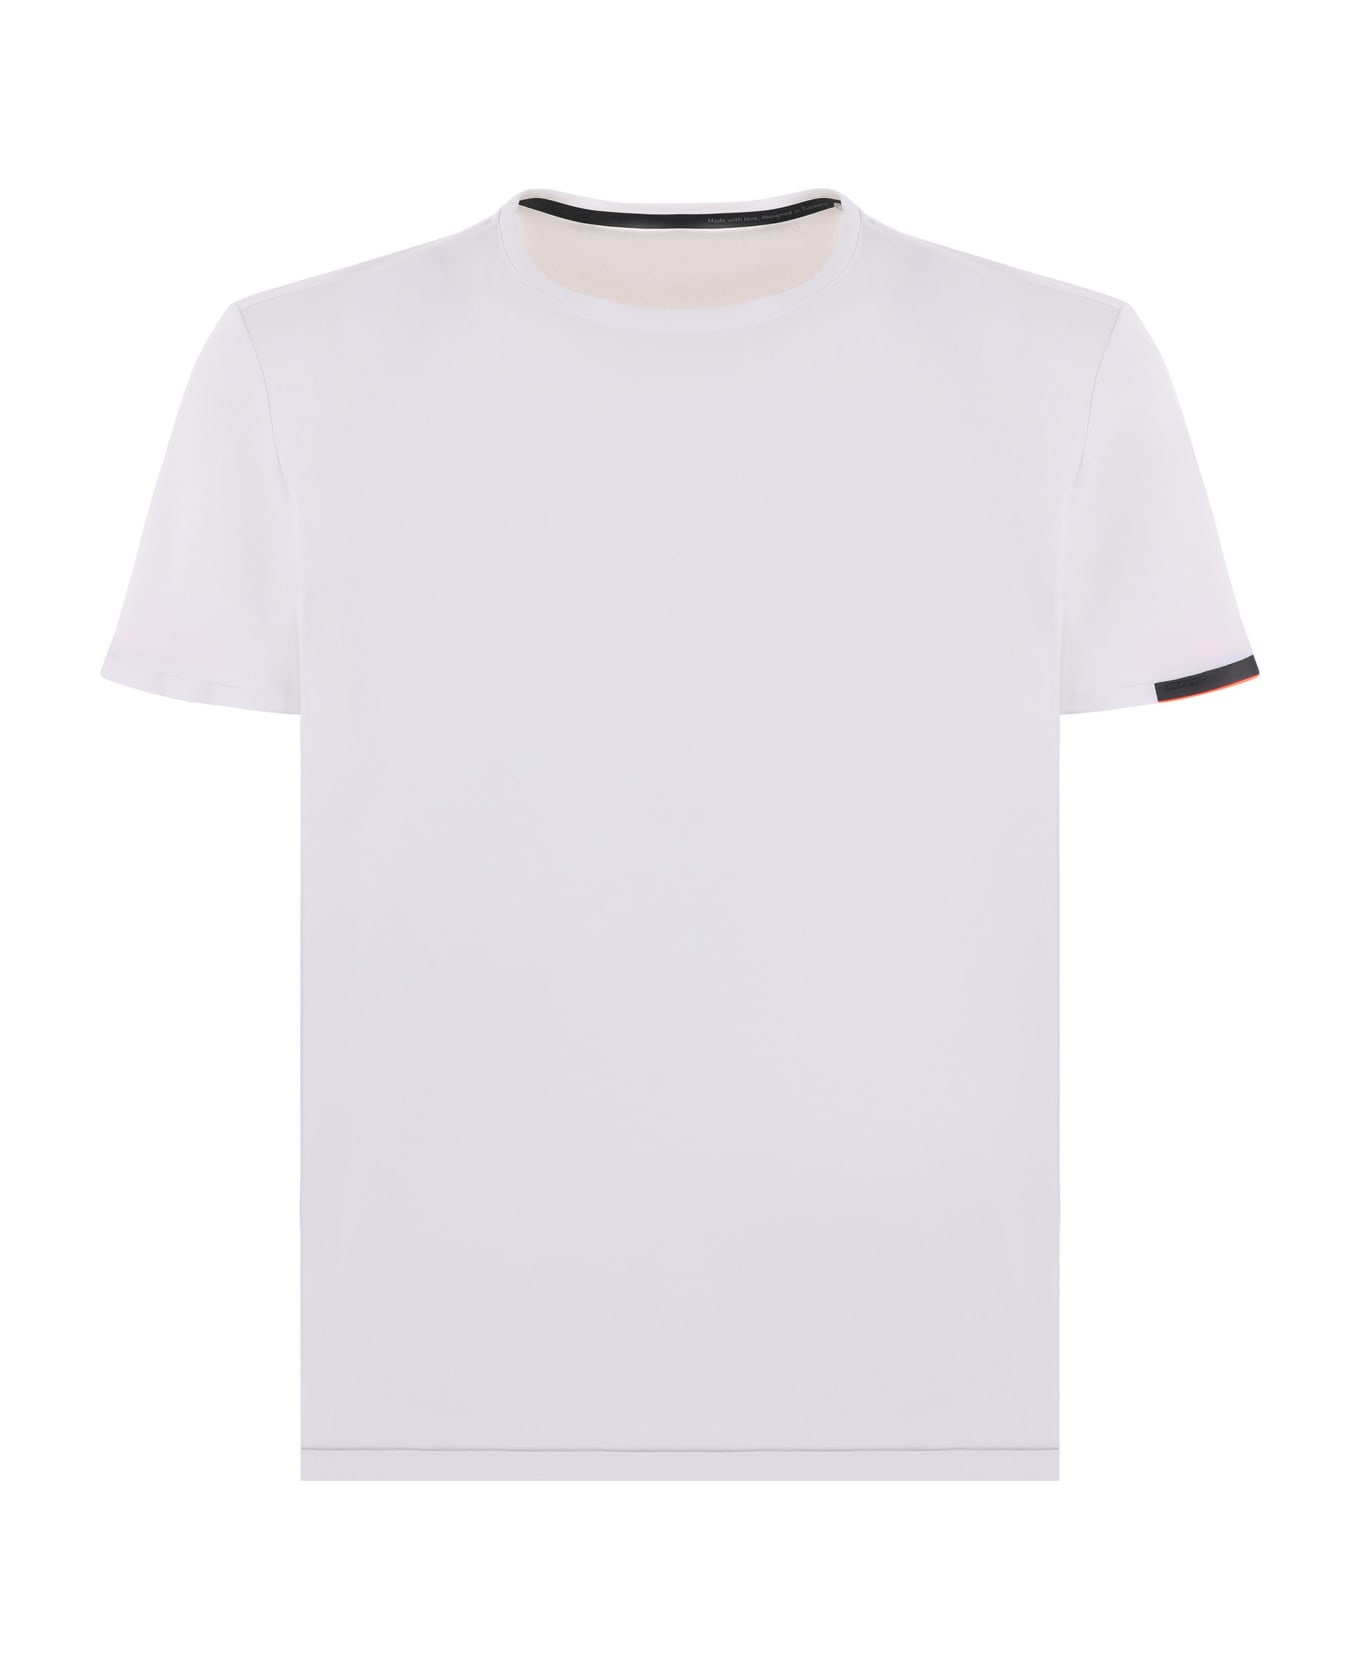 RRD - Roberto Ricci Design Rrd T-shirt - Bianco シャツ